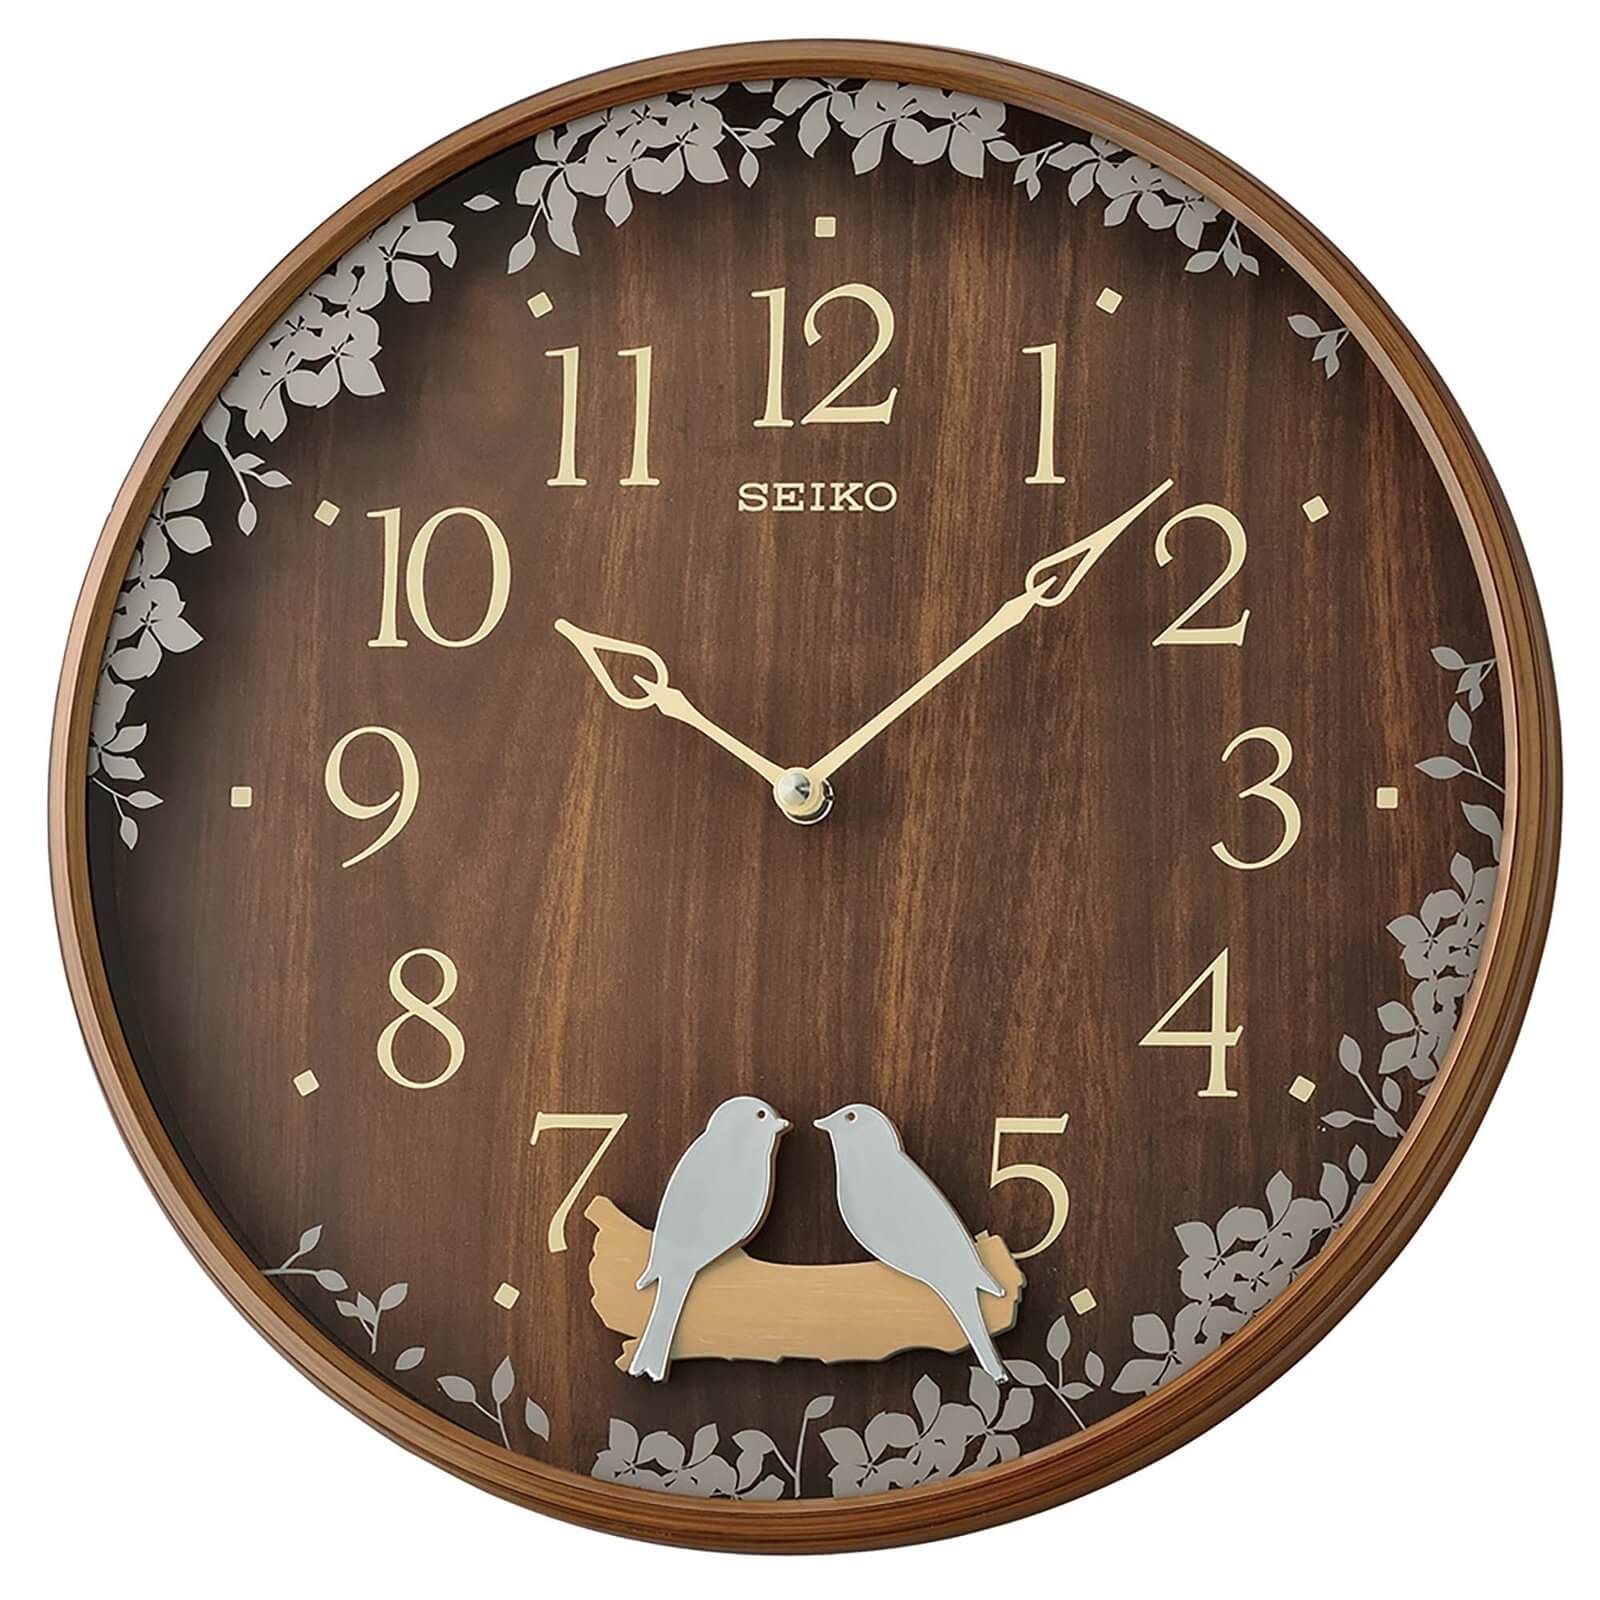 Seiko Bird Pendulum Wall Clock with Wood Effect Case